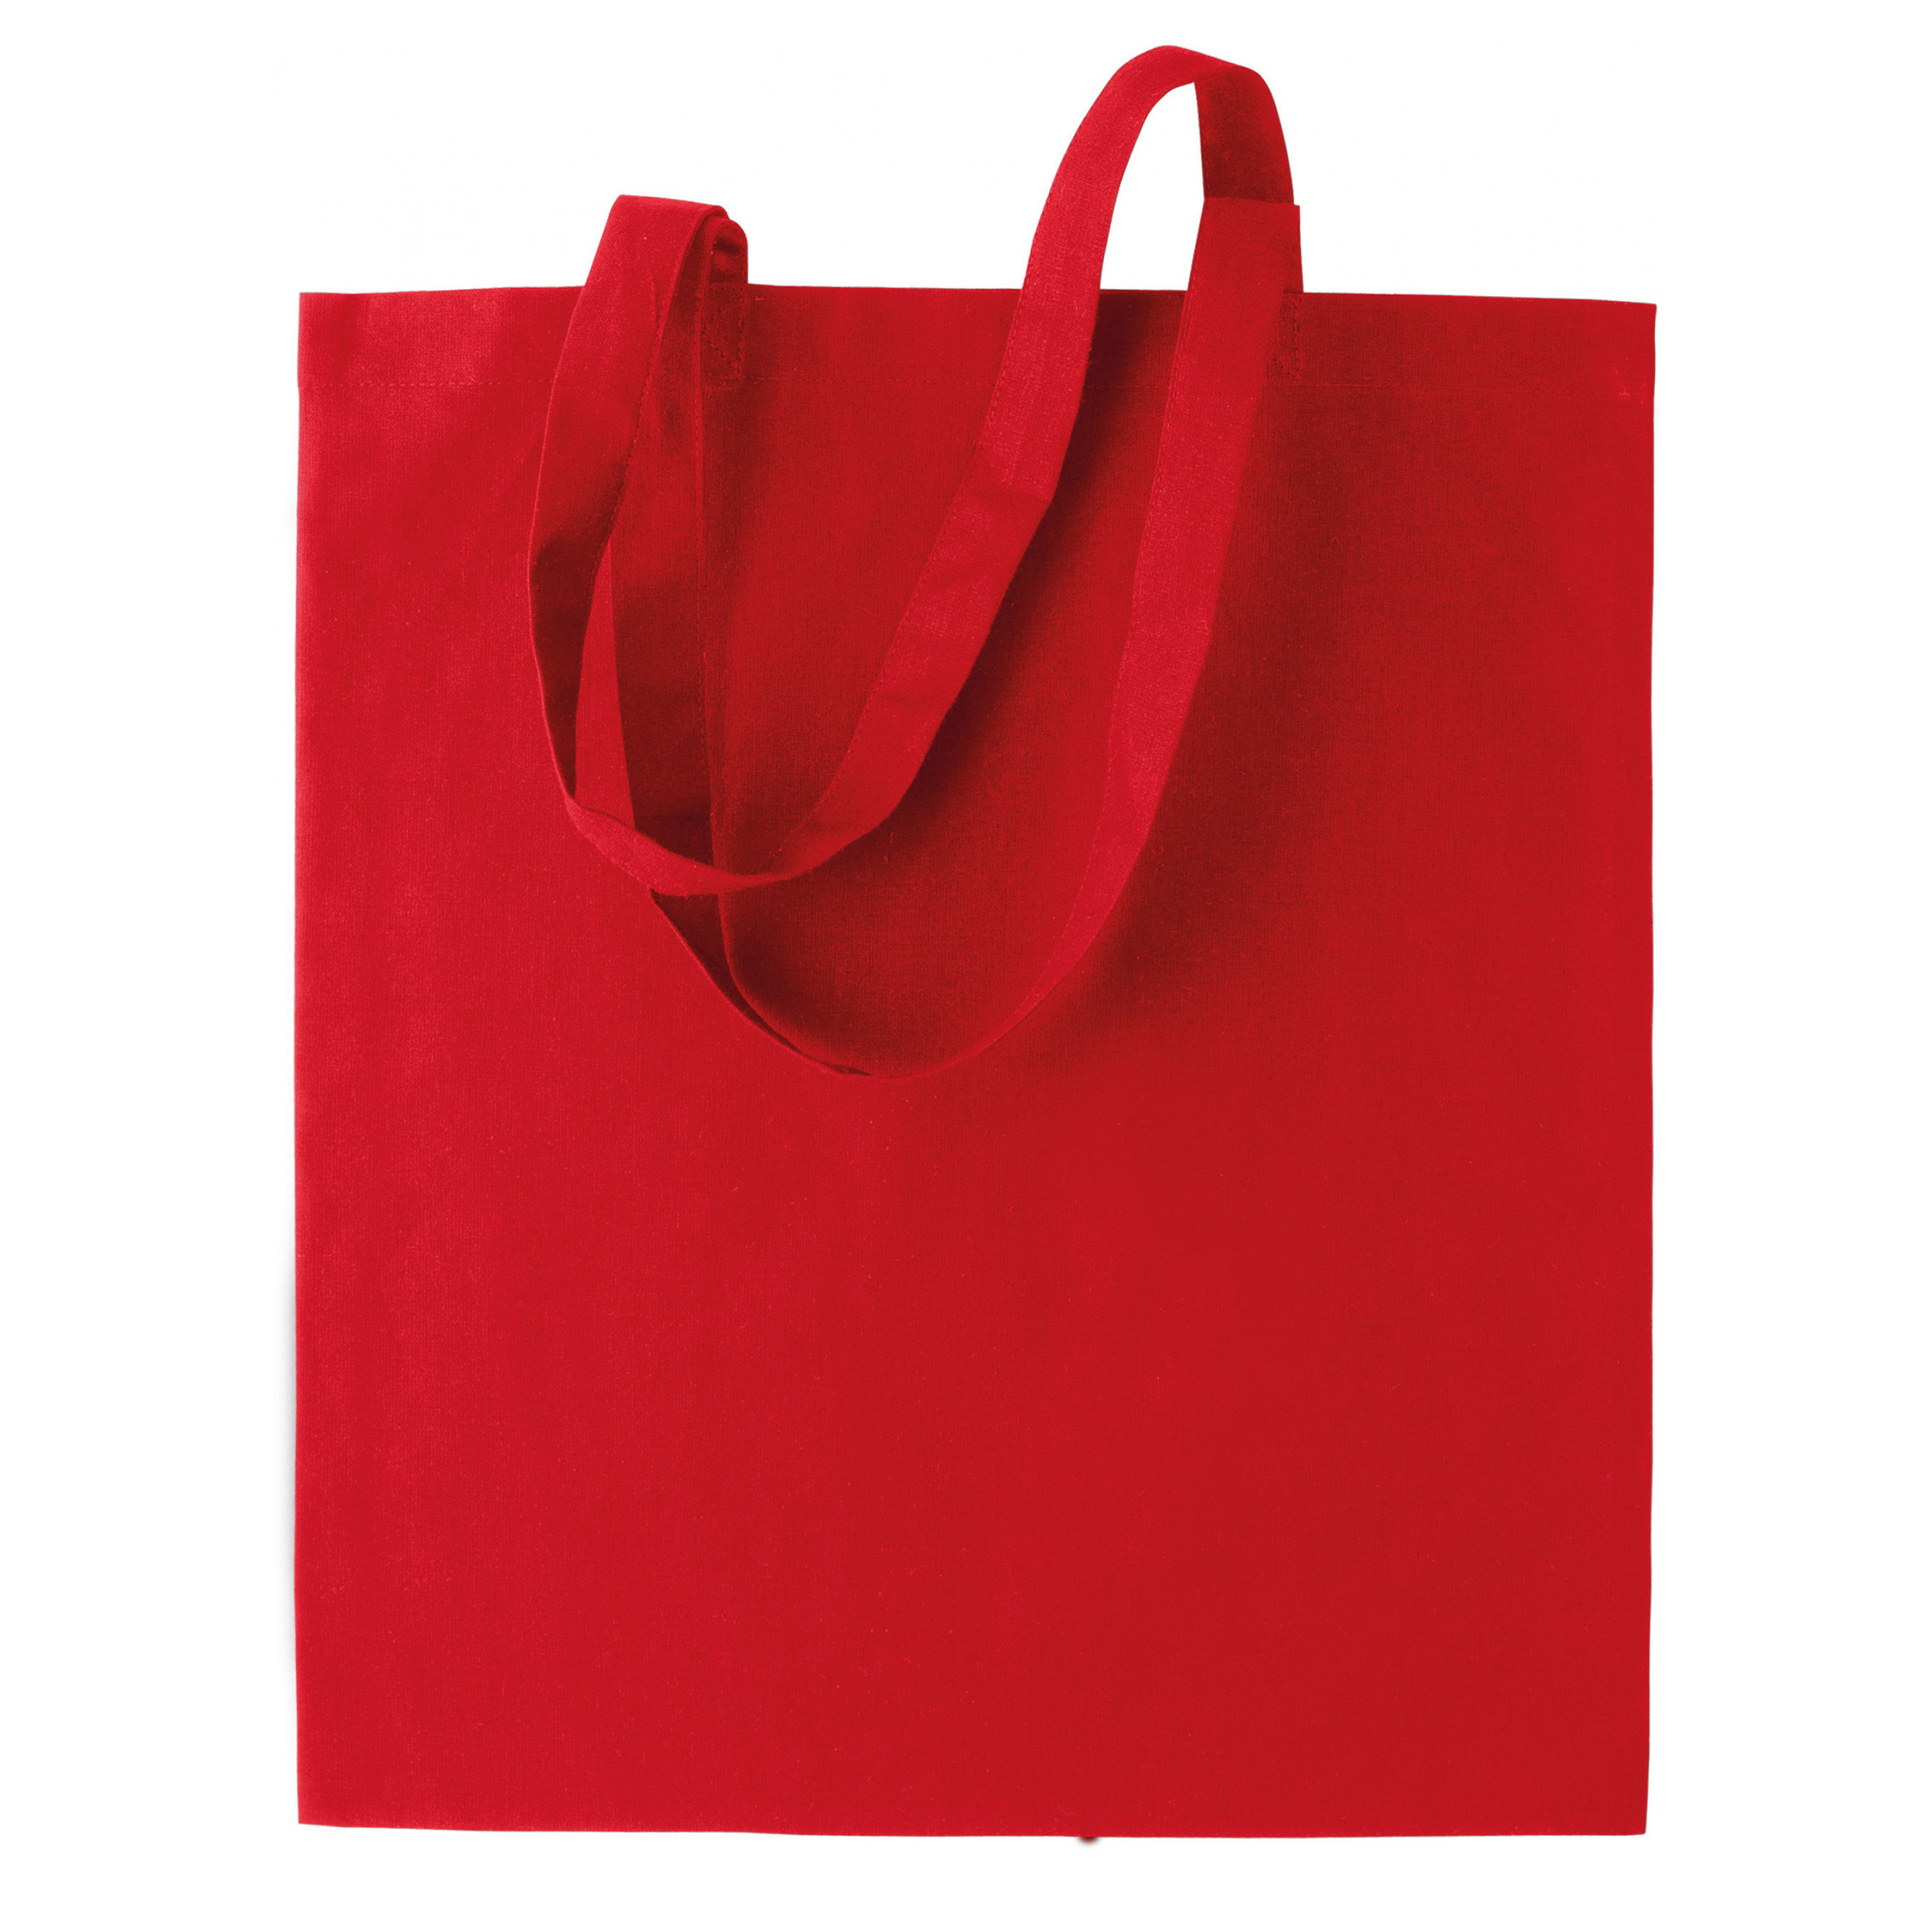 Basic katoenen schoudertasje in het rood 38 x 42 cm